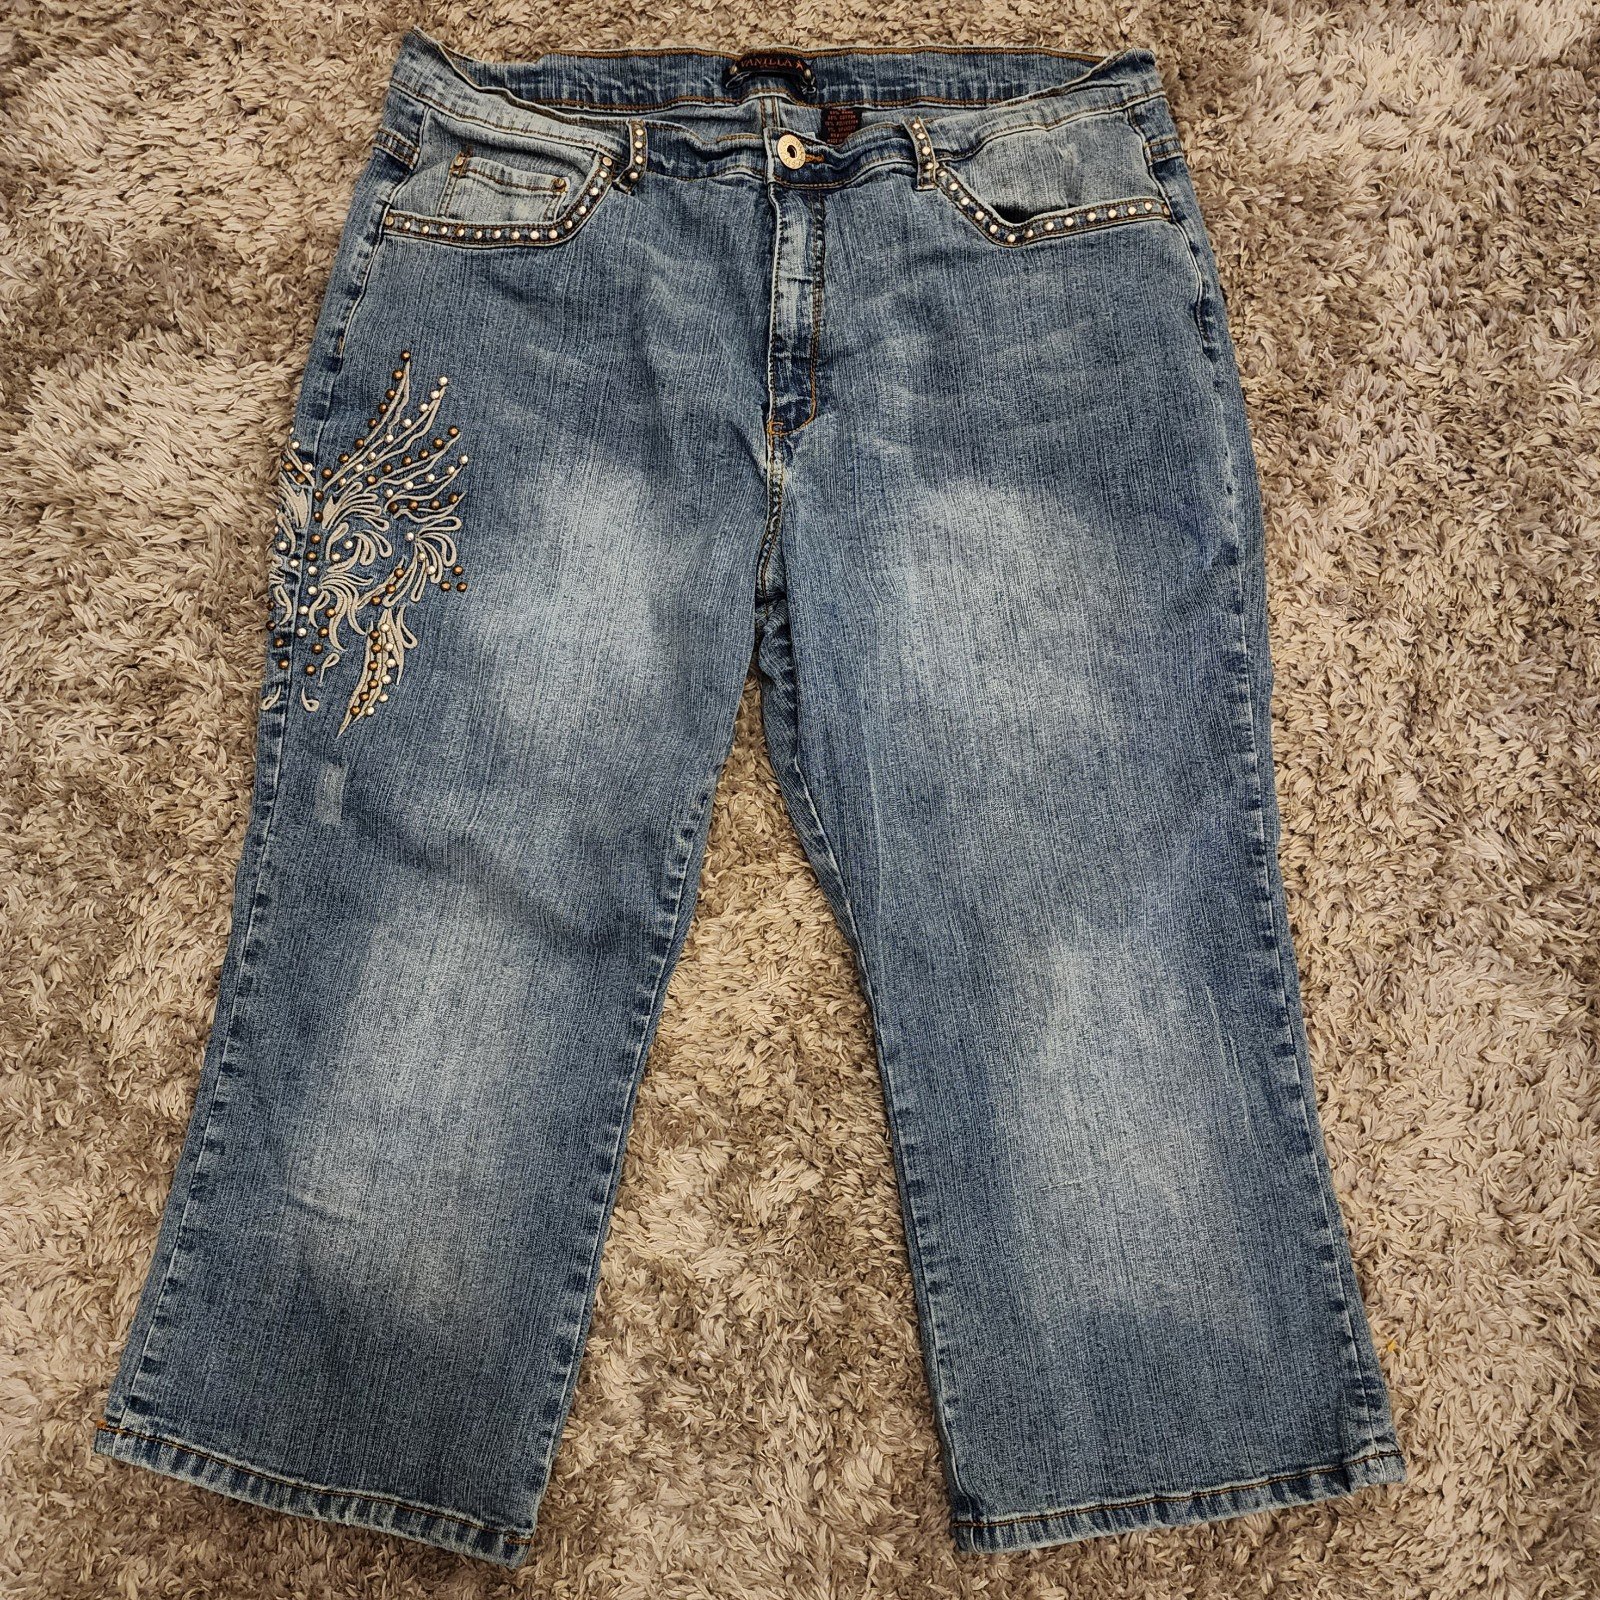 Great Vanilla Star Jean Capris Embellished Denim Jeans Size 20 Women´s Bottoms IRljLKrBN Buying Cheap